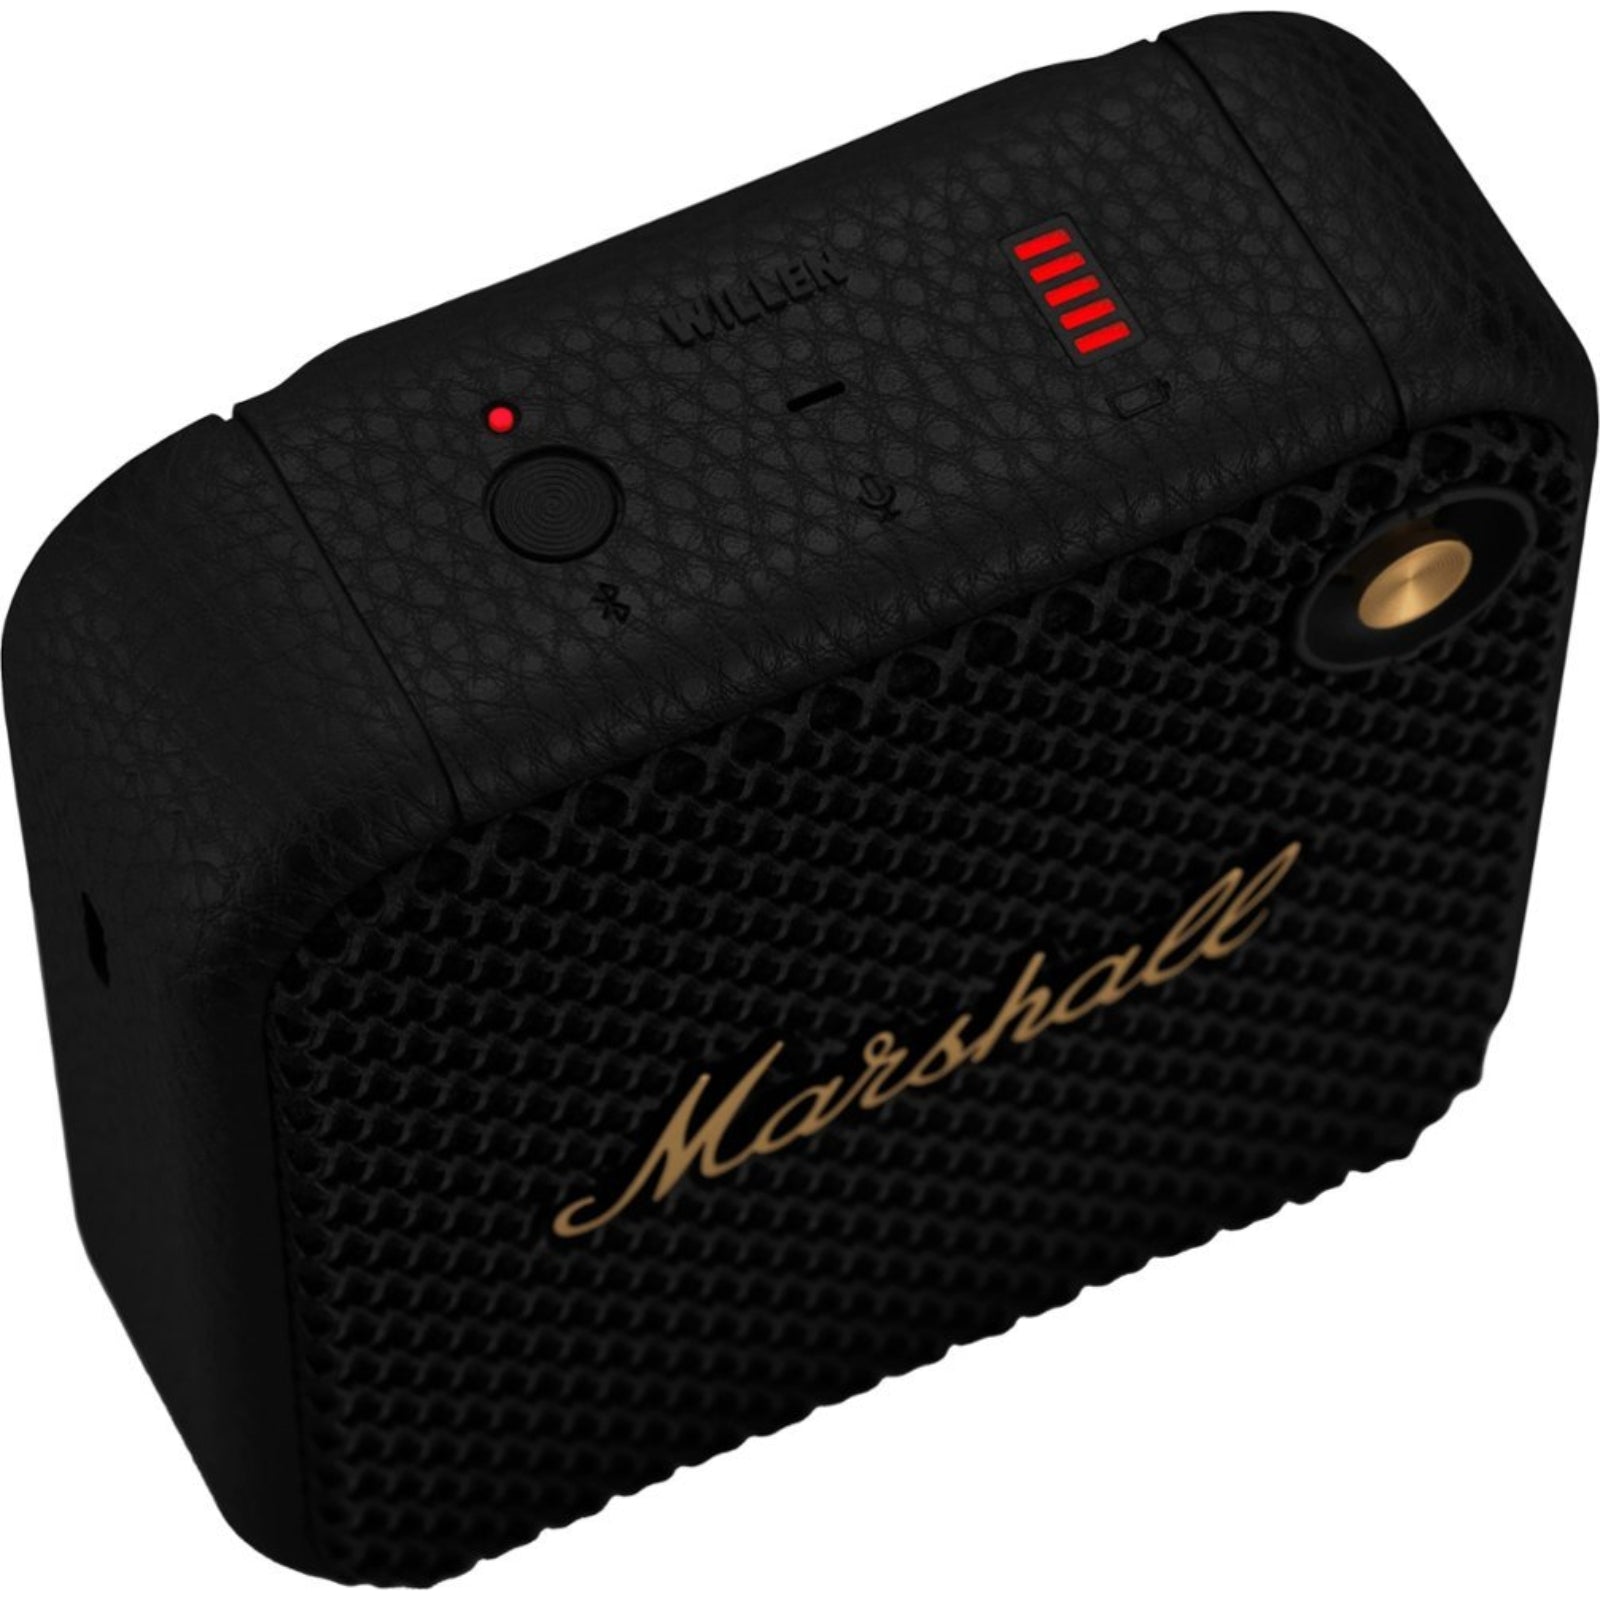 Marshall Willen Wireless Speaker (Black And Brass) - MyMobile